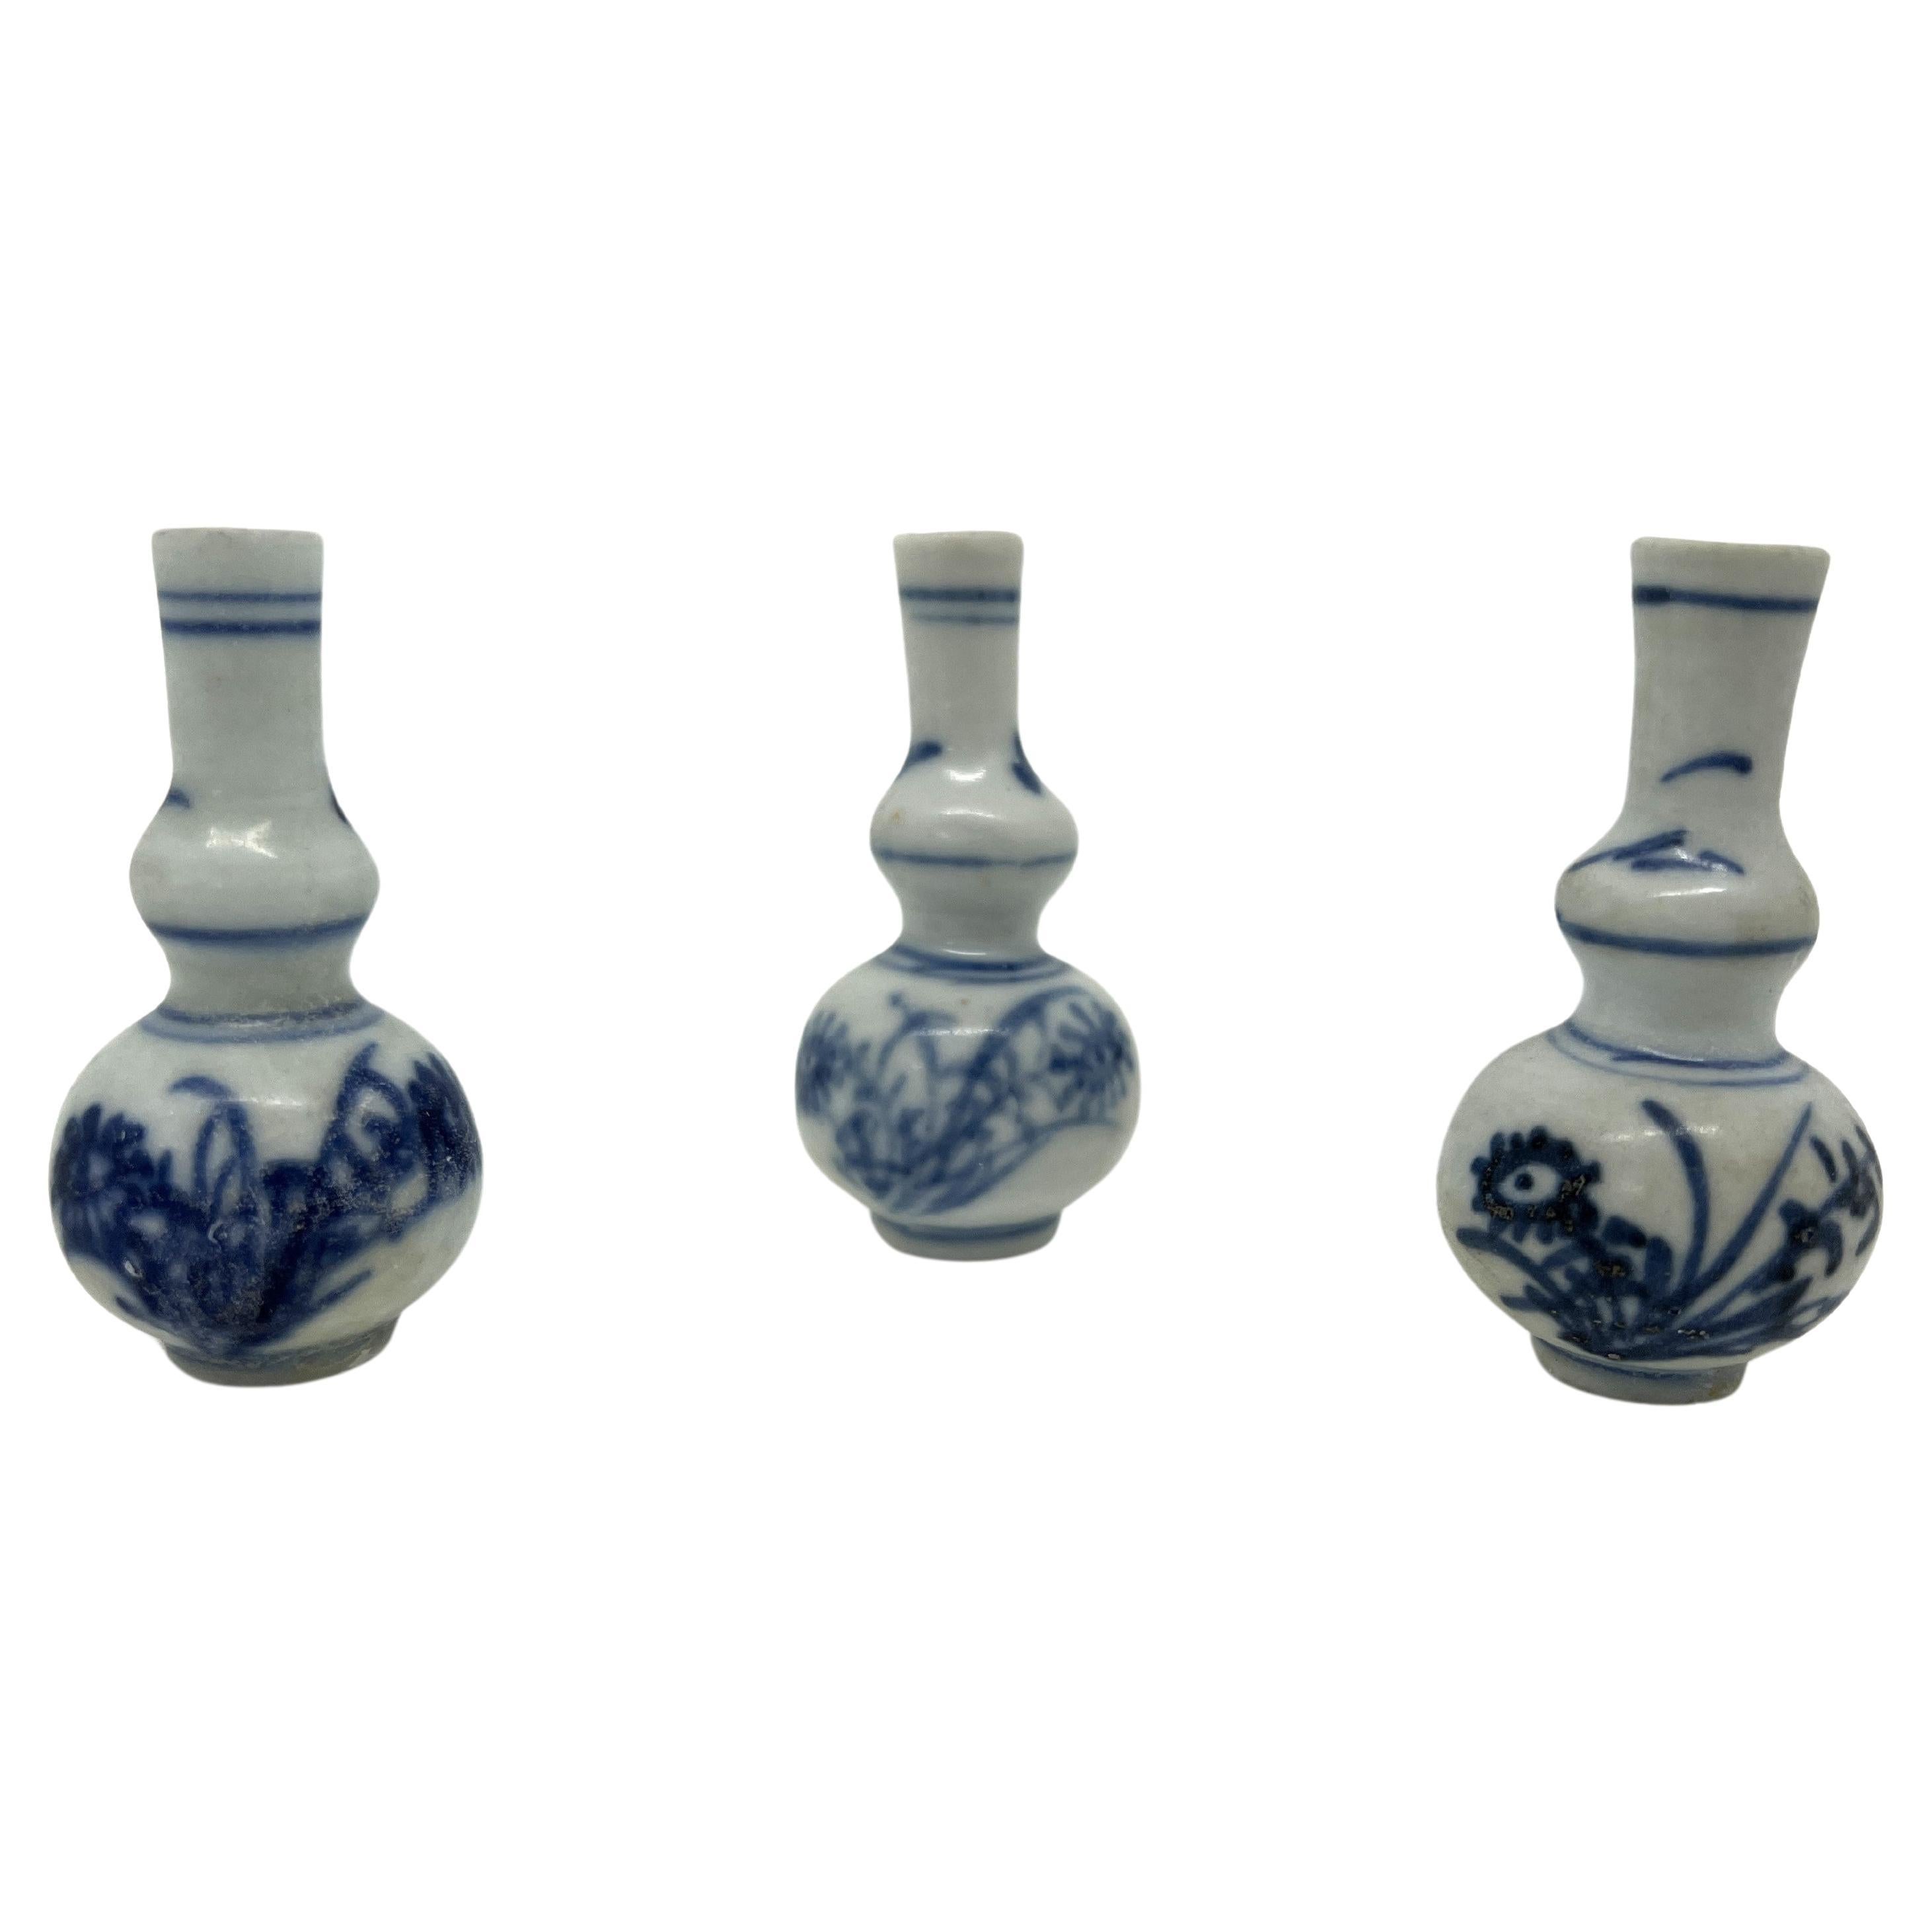 Three Blue and White Miniature Vases, C 1725, Qing Dynasty, Yongzheng Era